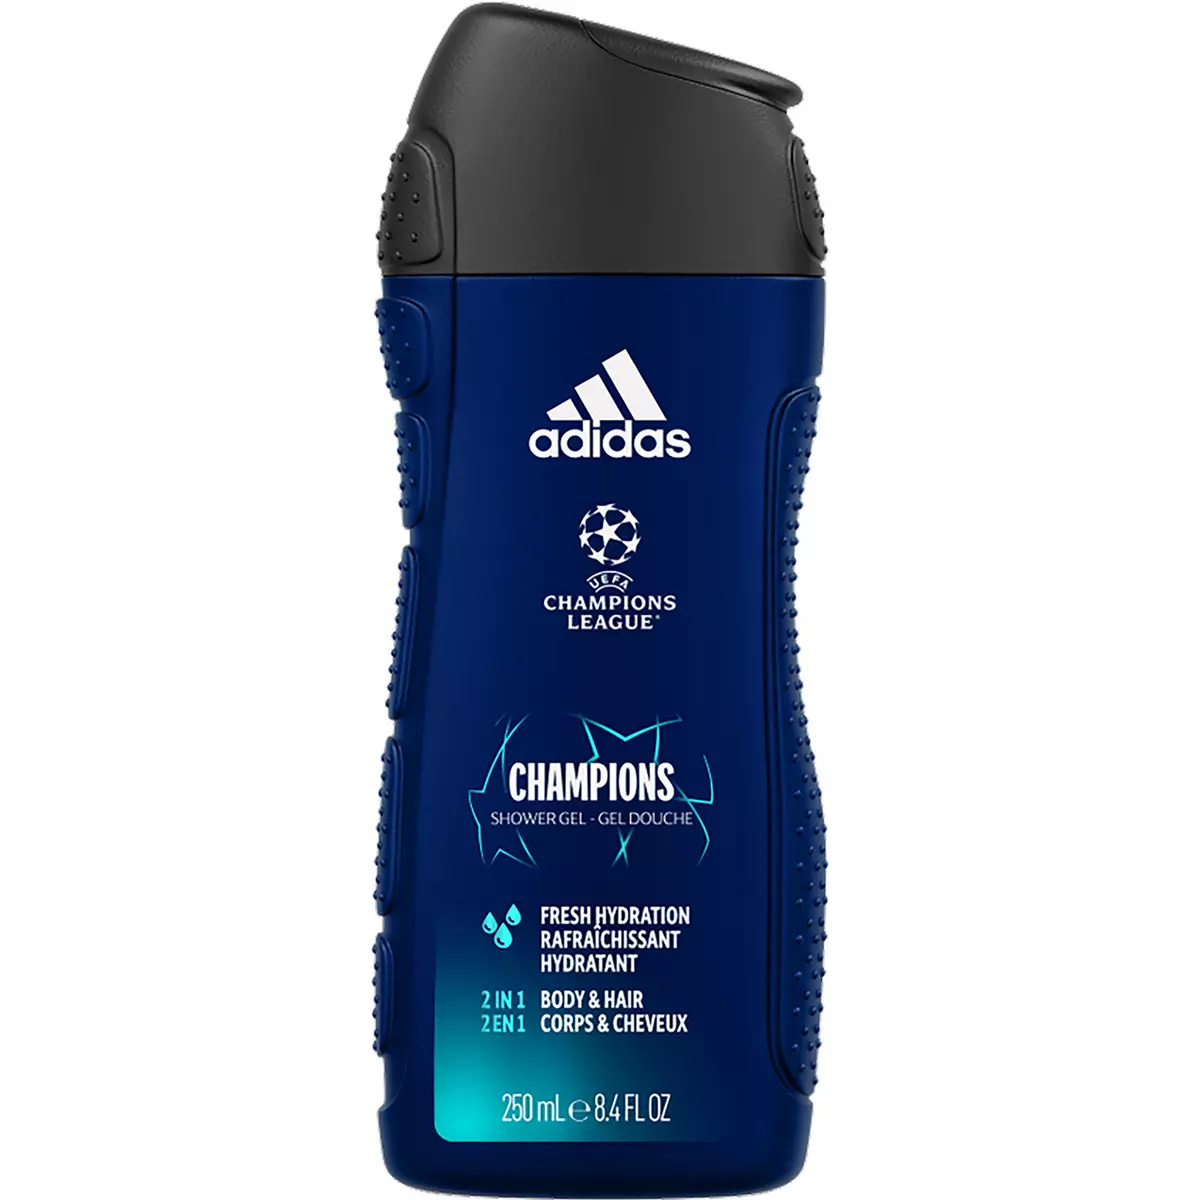 ADIDAS Gel douche rafraichissant hydratant corps et cheveux UEFA Champions league 250ml